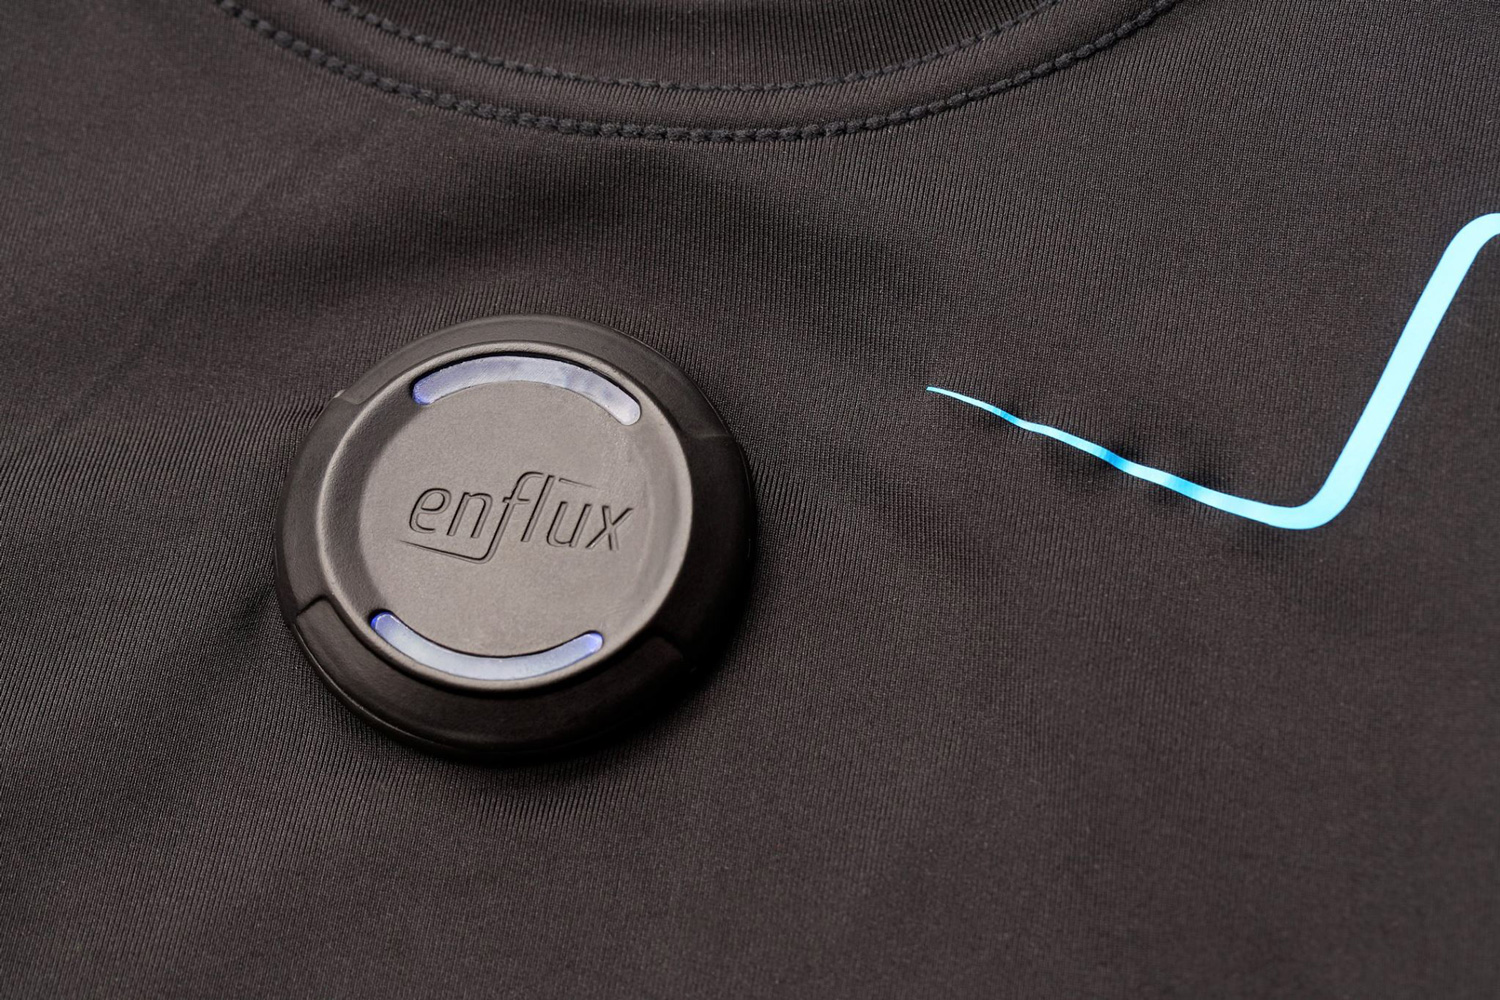 enflux kickstarter smart athletic clothing 5